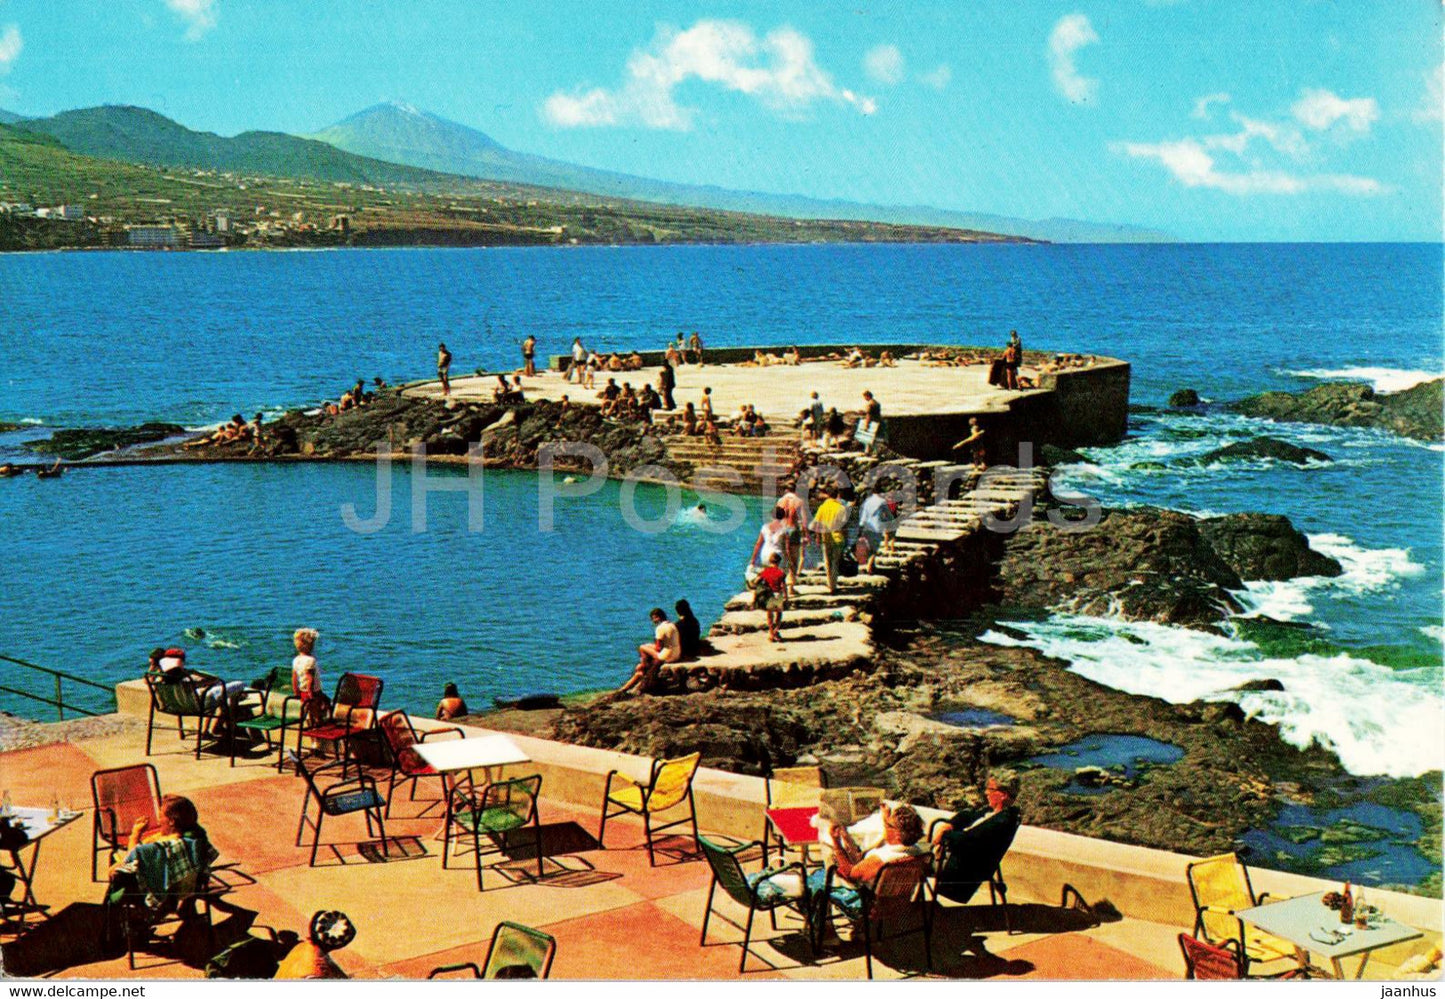 Punta Hidalgo - Piscina al fondo el Teide - swimming pool - Tenerife - 2226 - Spain - unused - JH Postcards